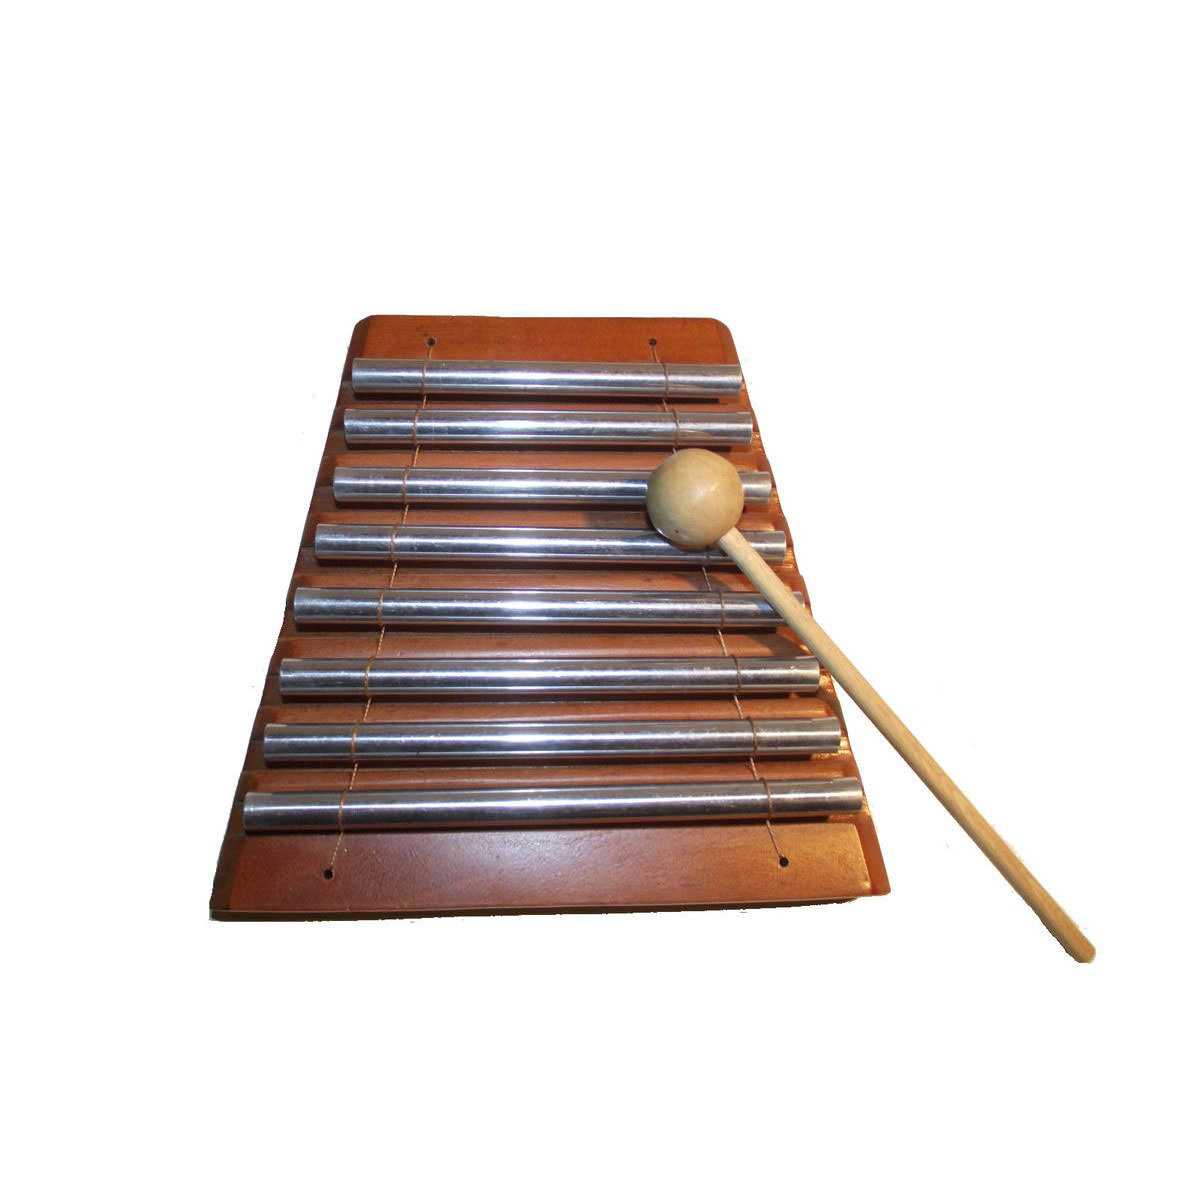 Kinder Xylophon Xylofon Glockenspiel Spielzeug Holz Musikinstrument Klangspiel D 